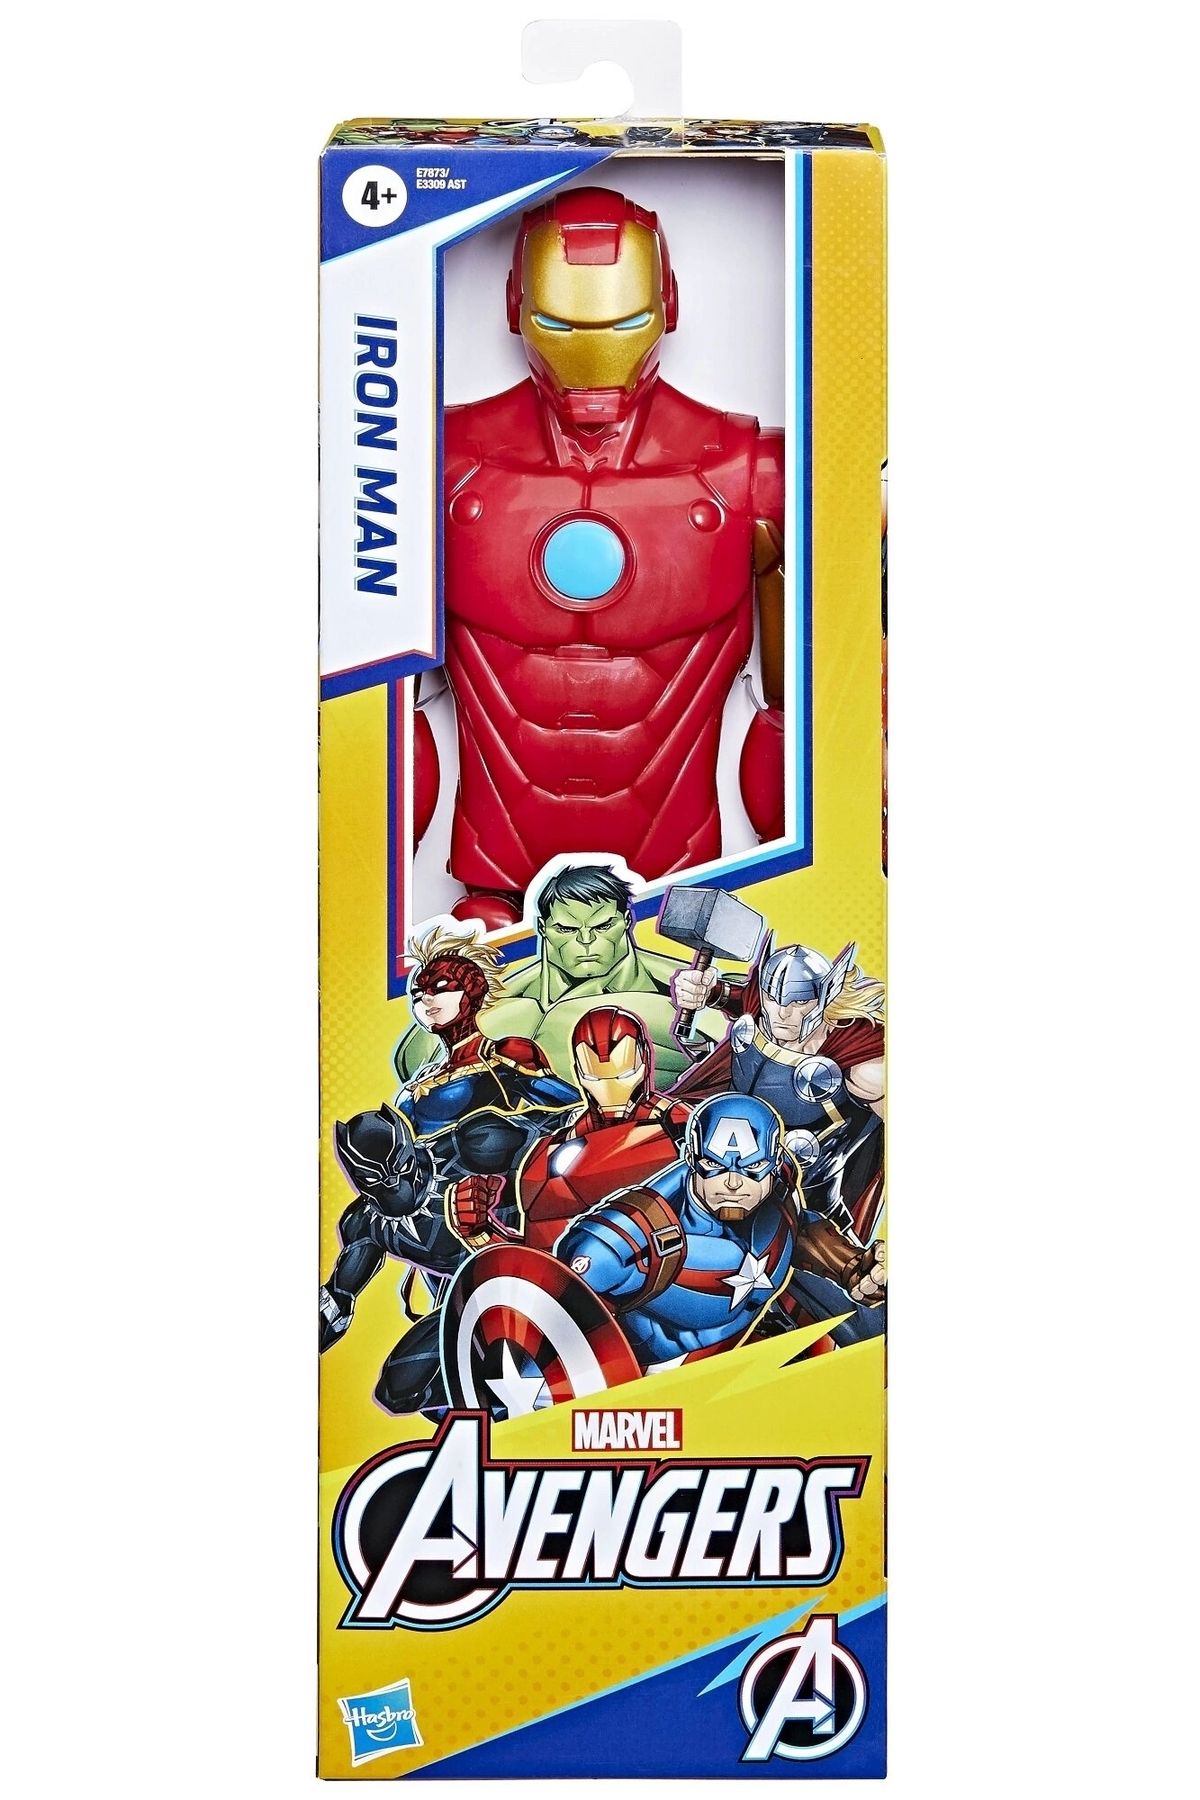 MARVEL Avengers Endgame Titan Hero Iron Man Figür